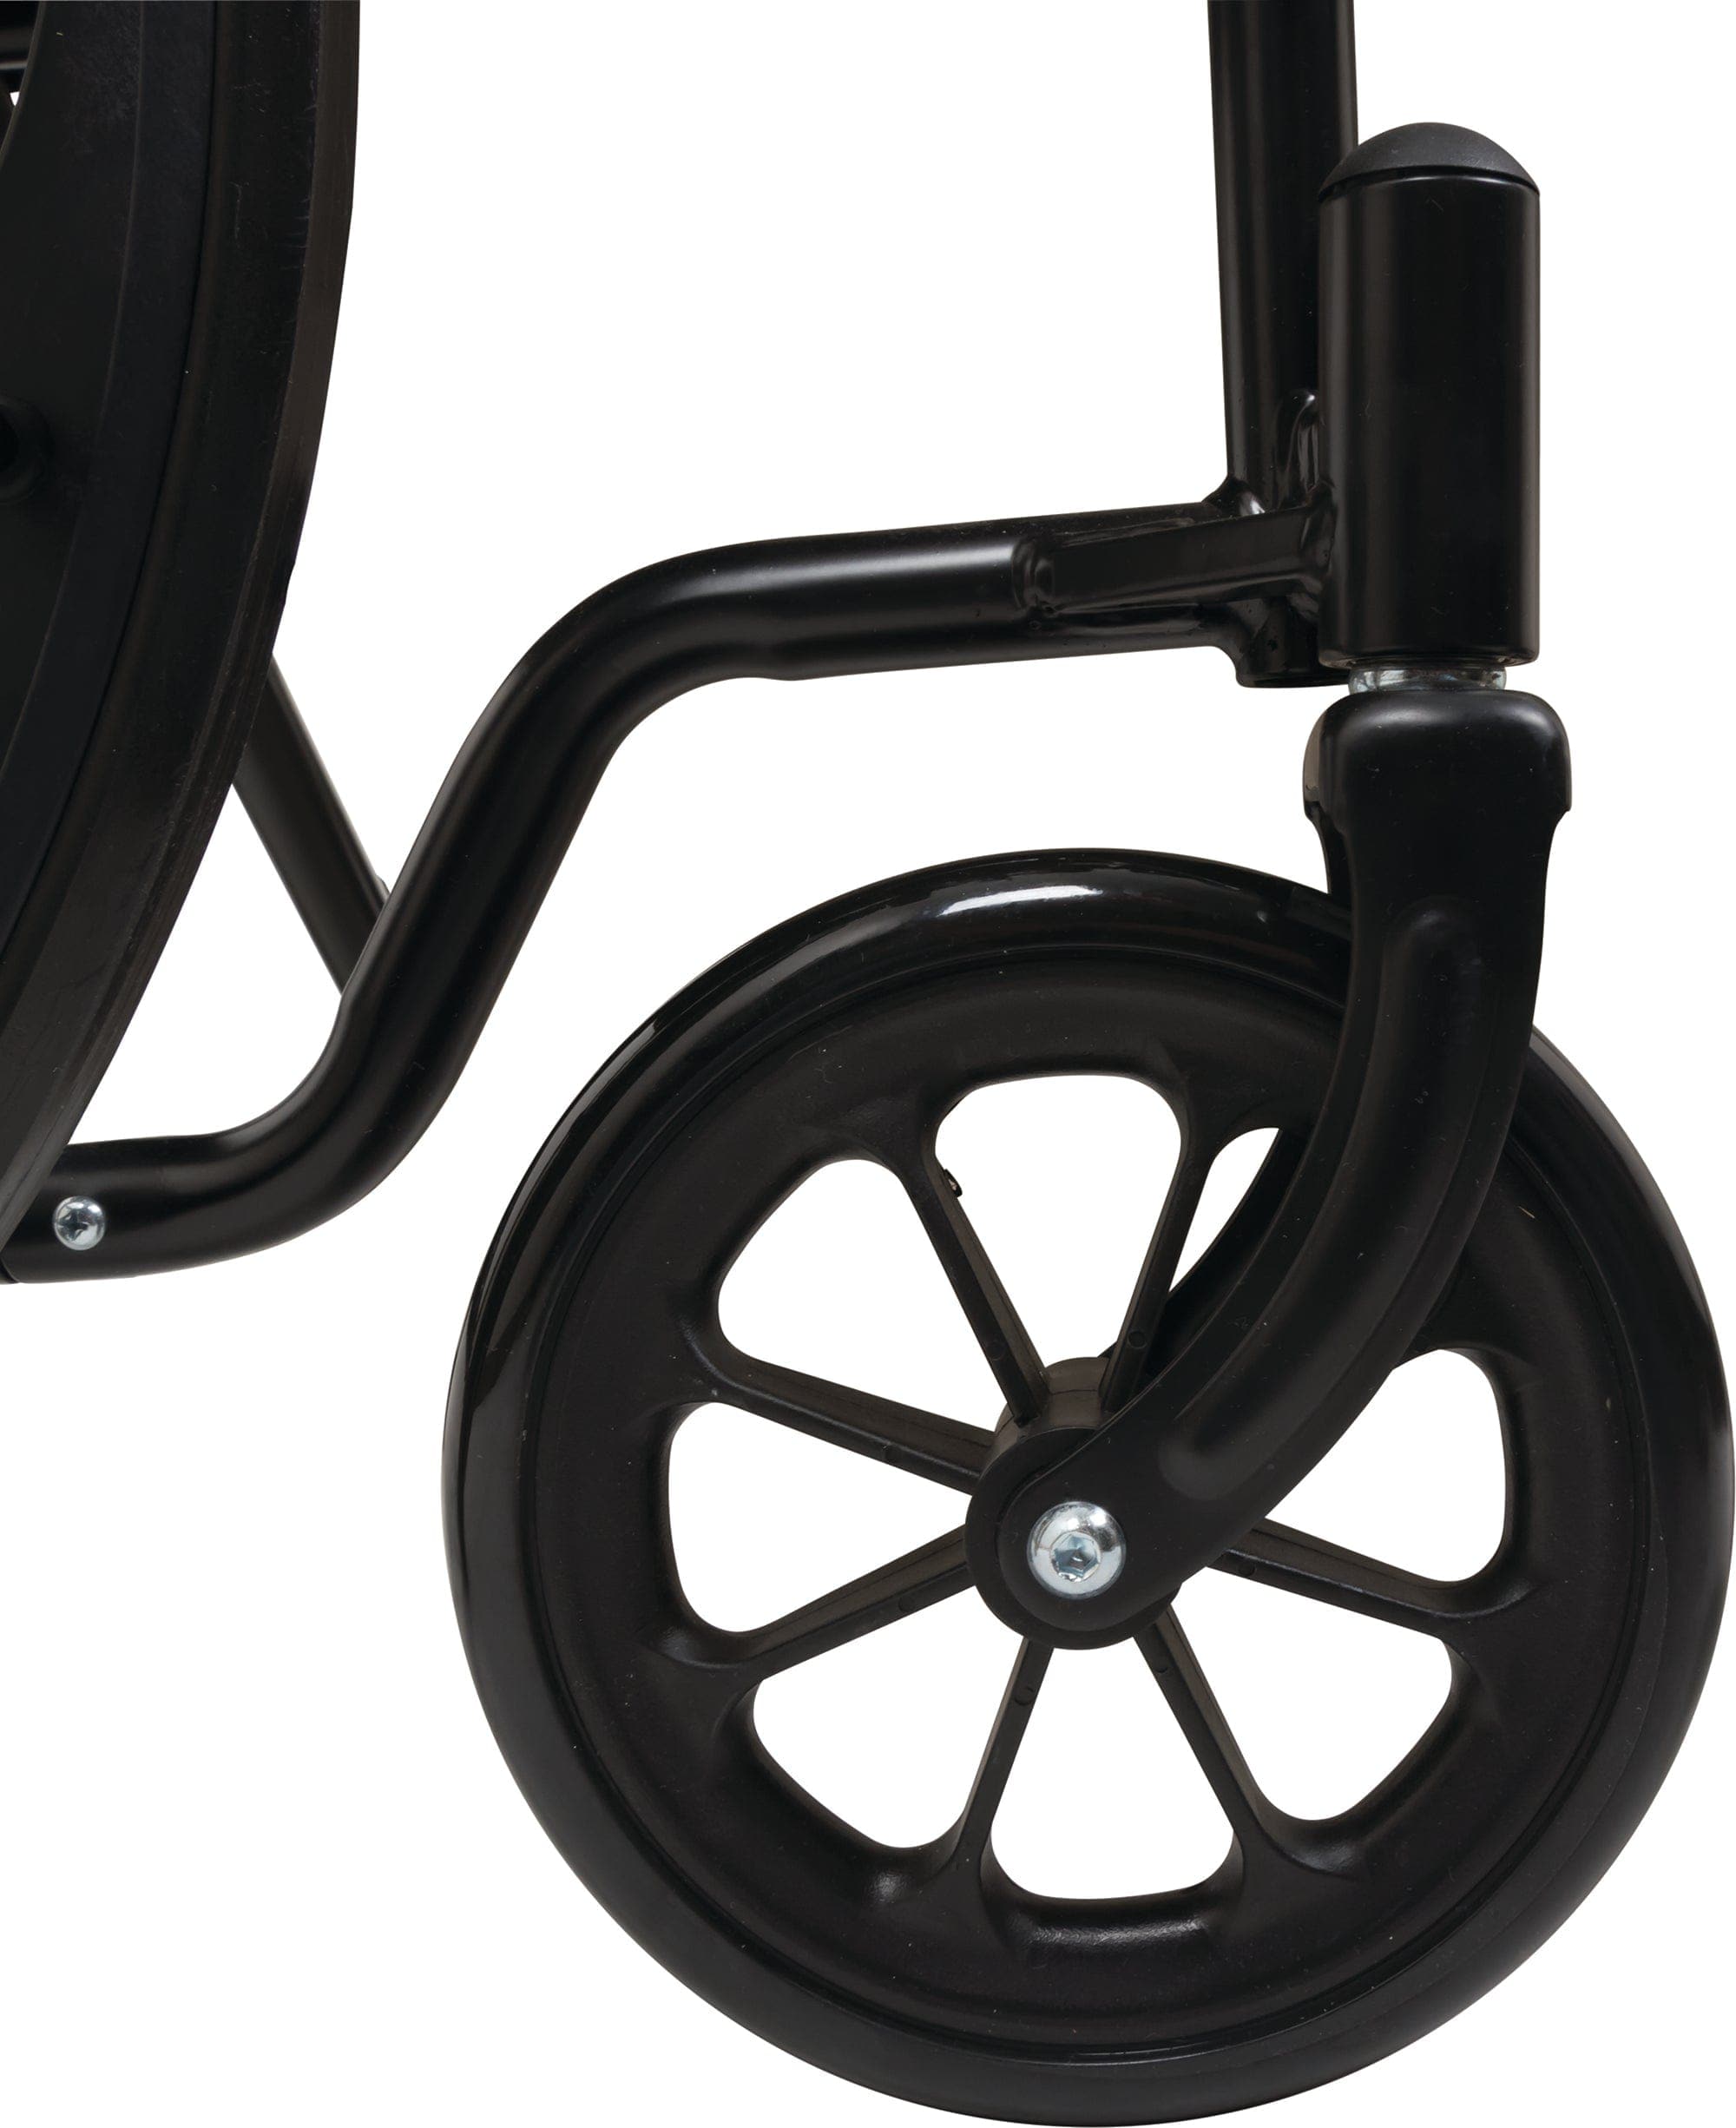 Compass Health K1 Wheelchairs Compass Health ProBasics K1 Lightweight Wheelchair with 20" x 16" Seat,